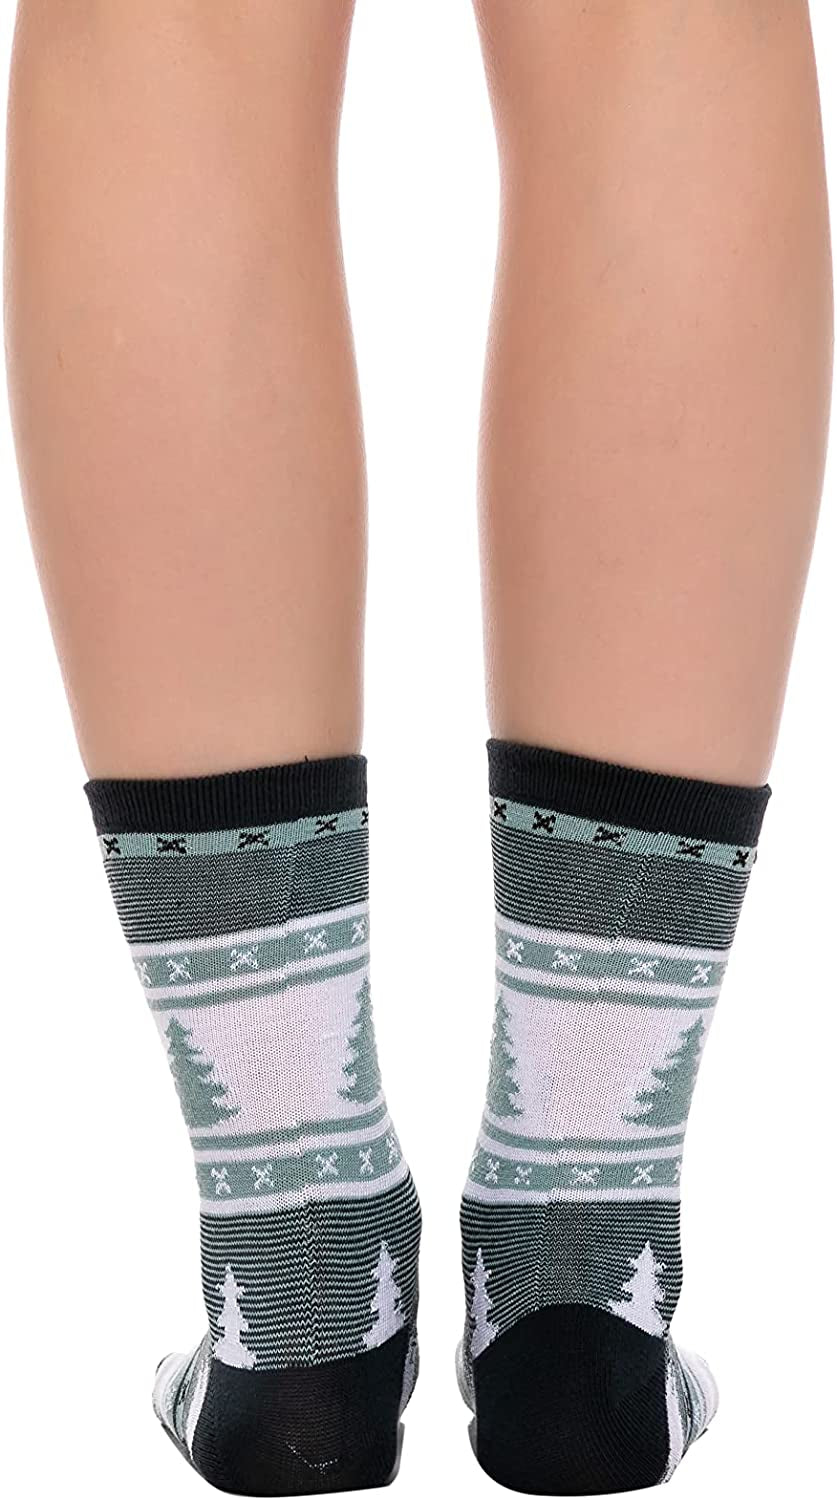 JOYIN 12 Pairs Christmas Cotton Socks, Holiday Warm Soft Socks for Winter Christmas, Holiday or Birthday Gift